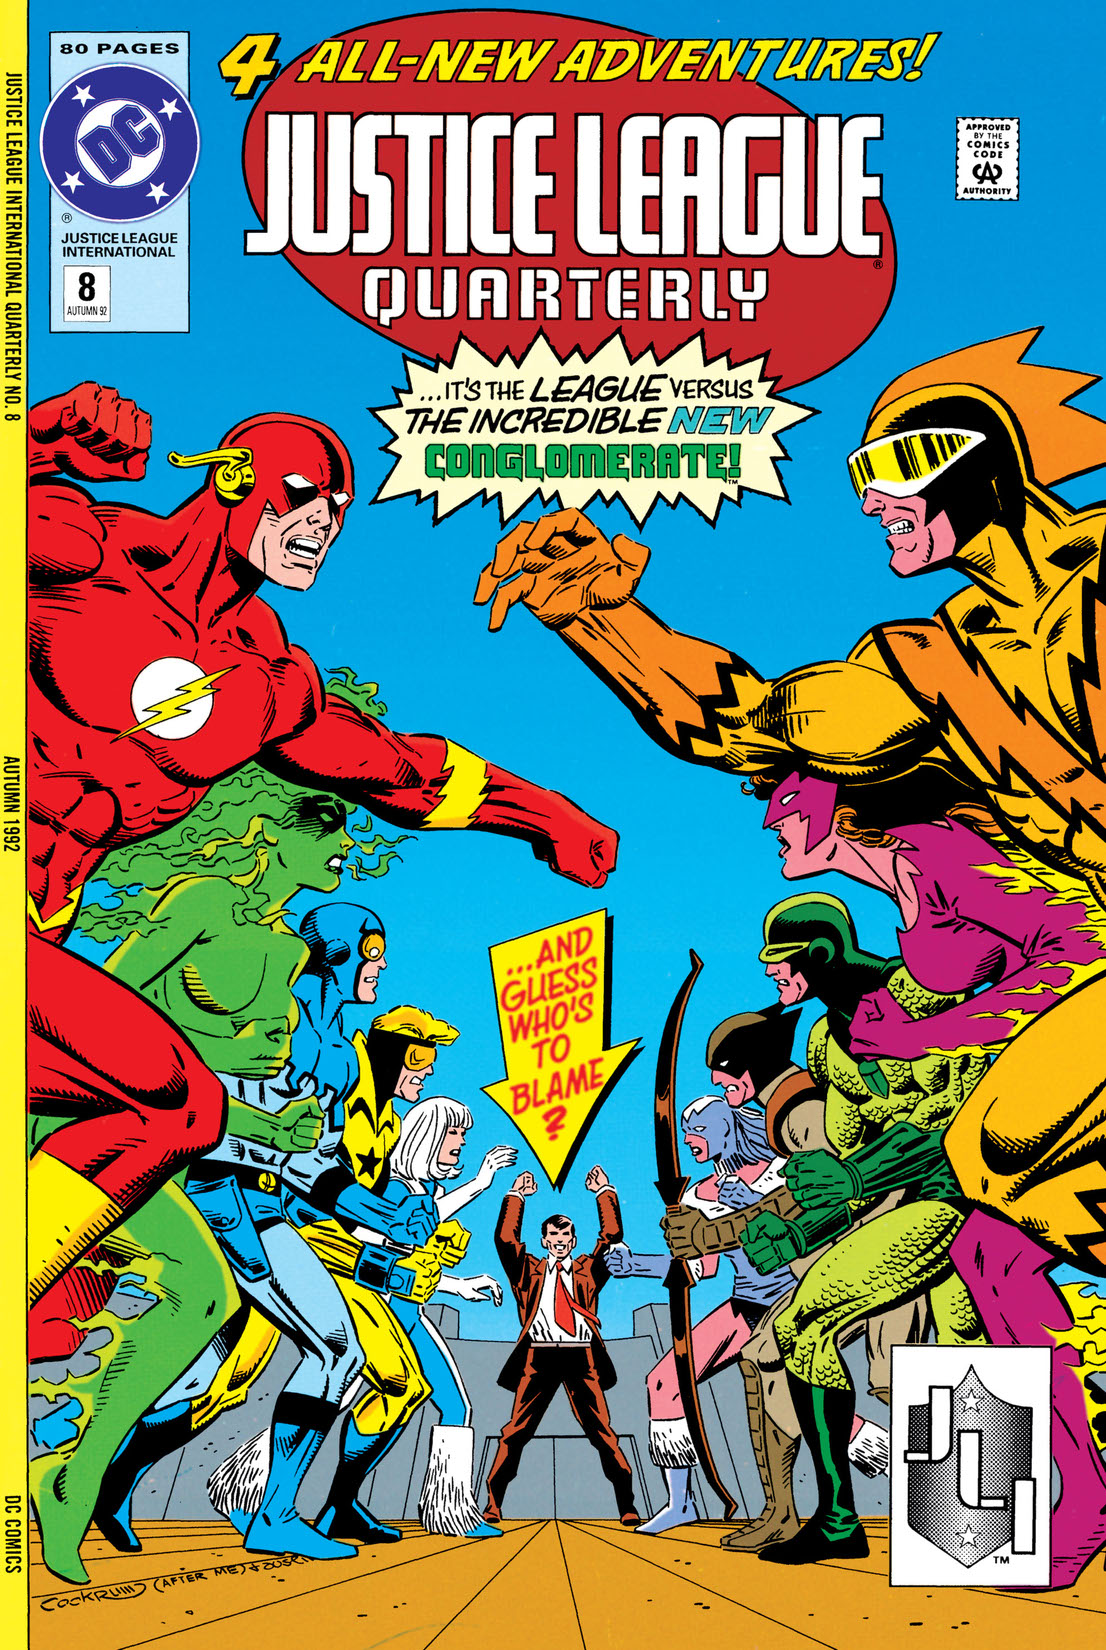 Justice League Quarterly #8 preview images